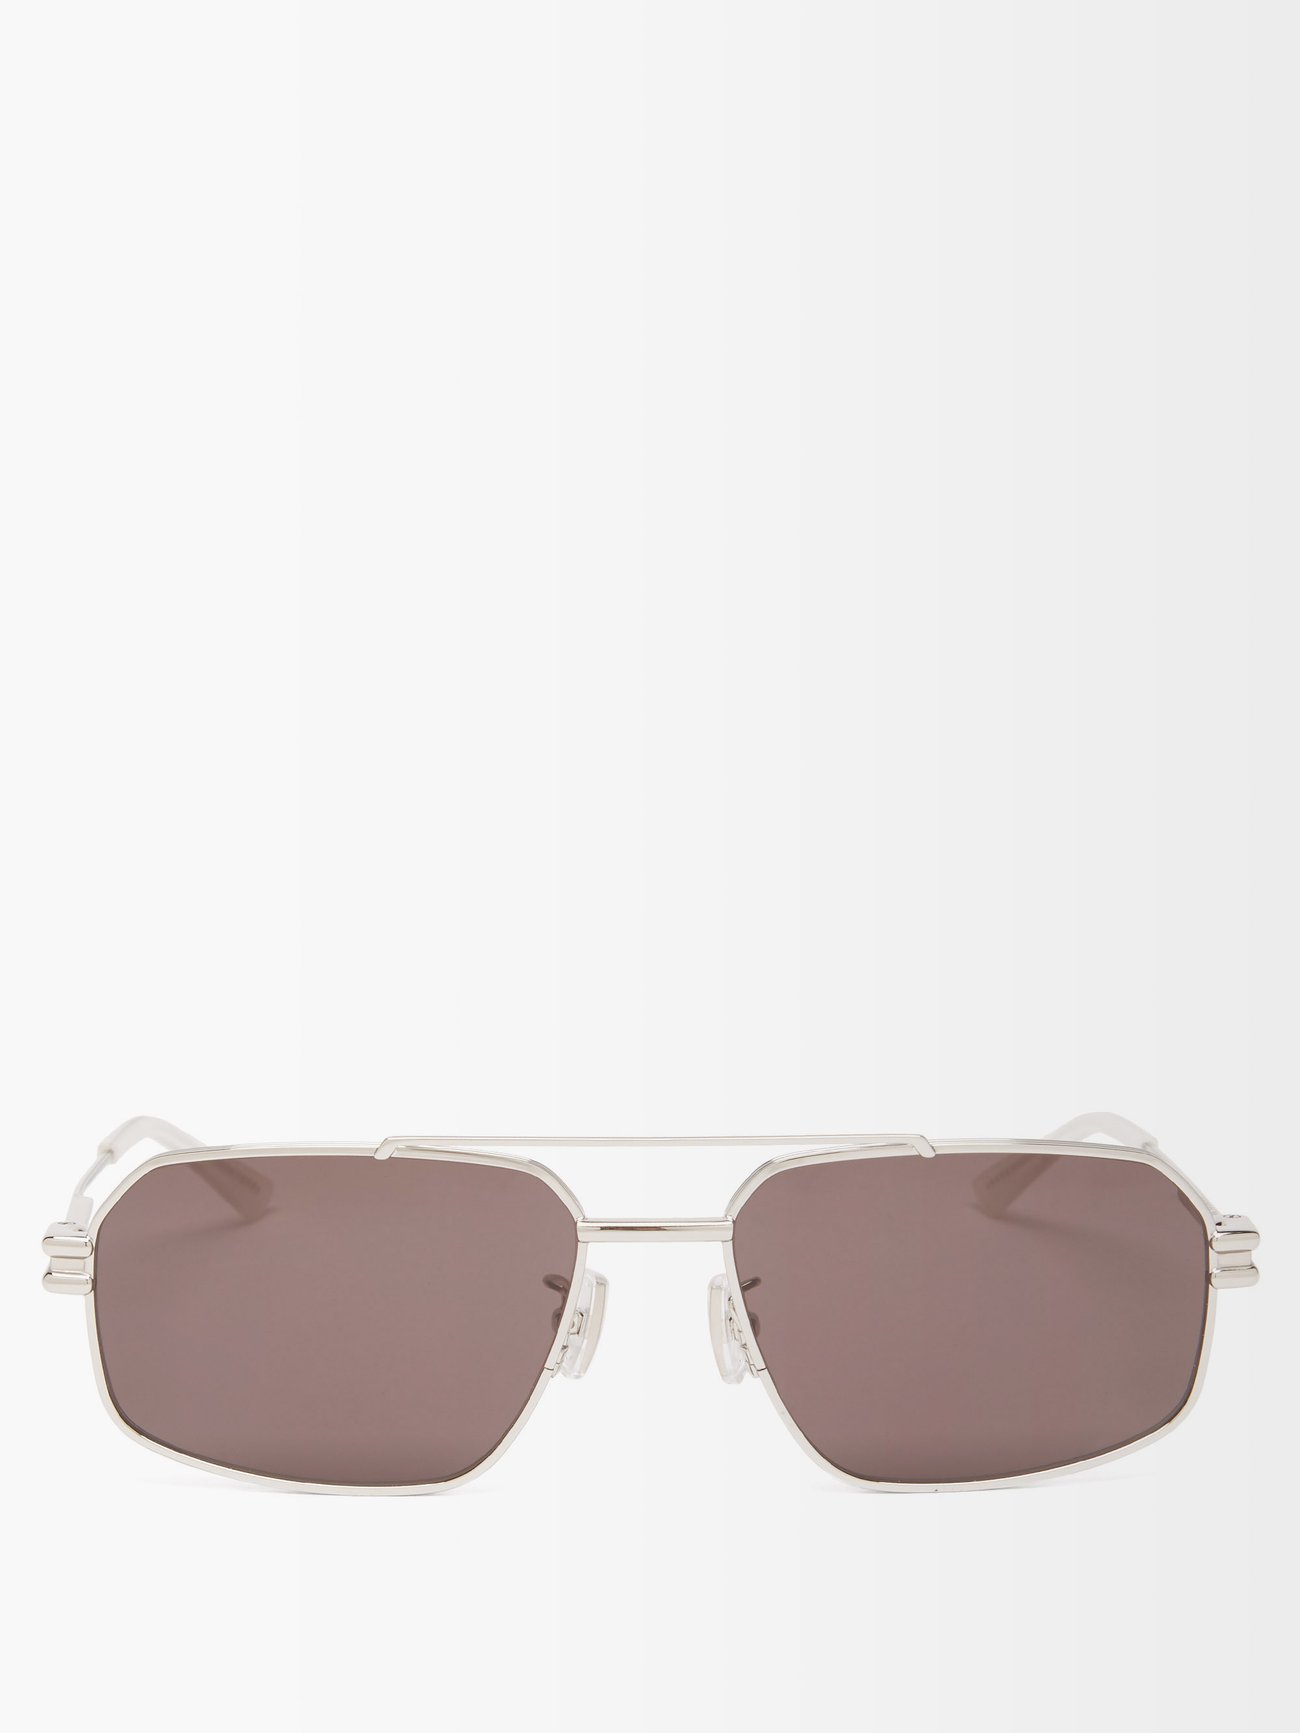 Metallic Lock angular aviator sunglasses, Bottega Veneta